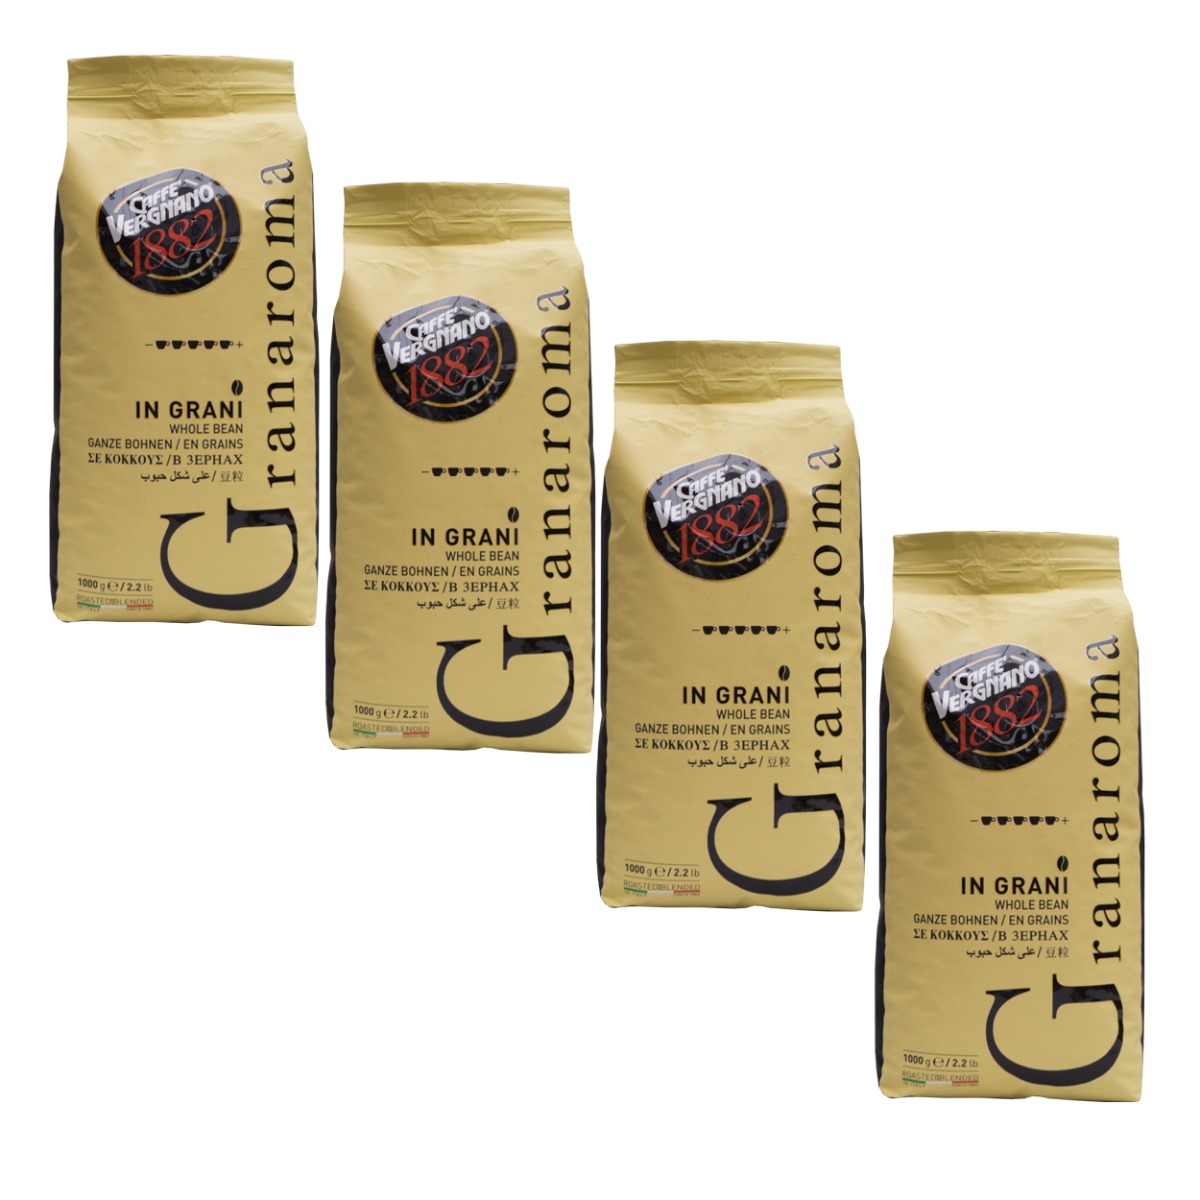 Caffè Vergnano 1882 Gran Aroma 4 kg koffiebonen voordeeldoos